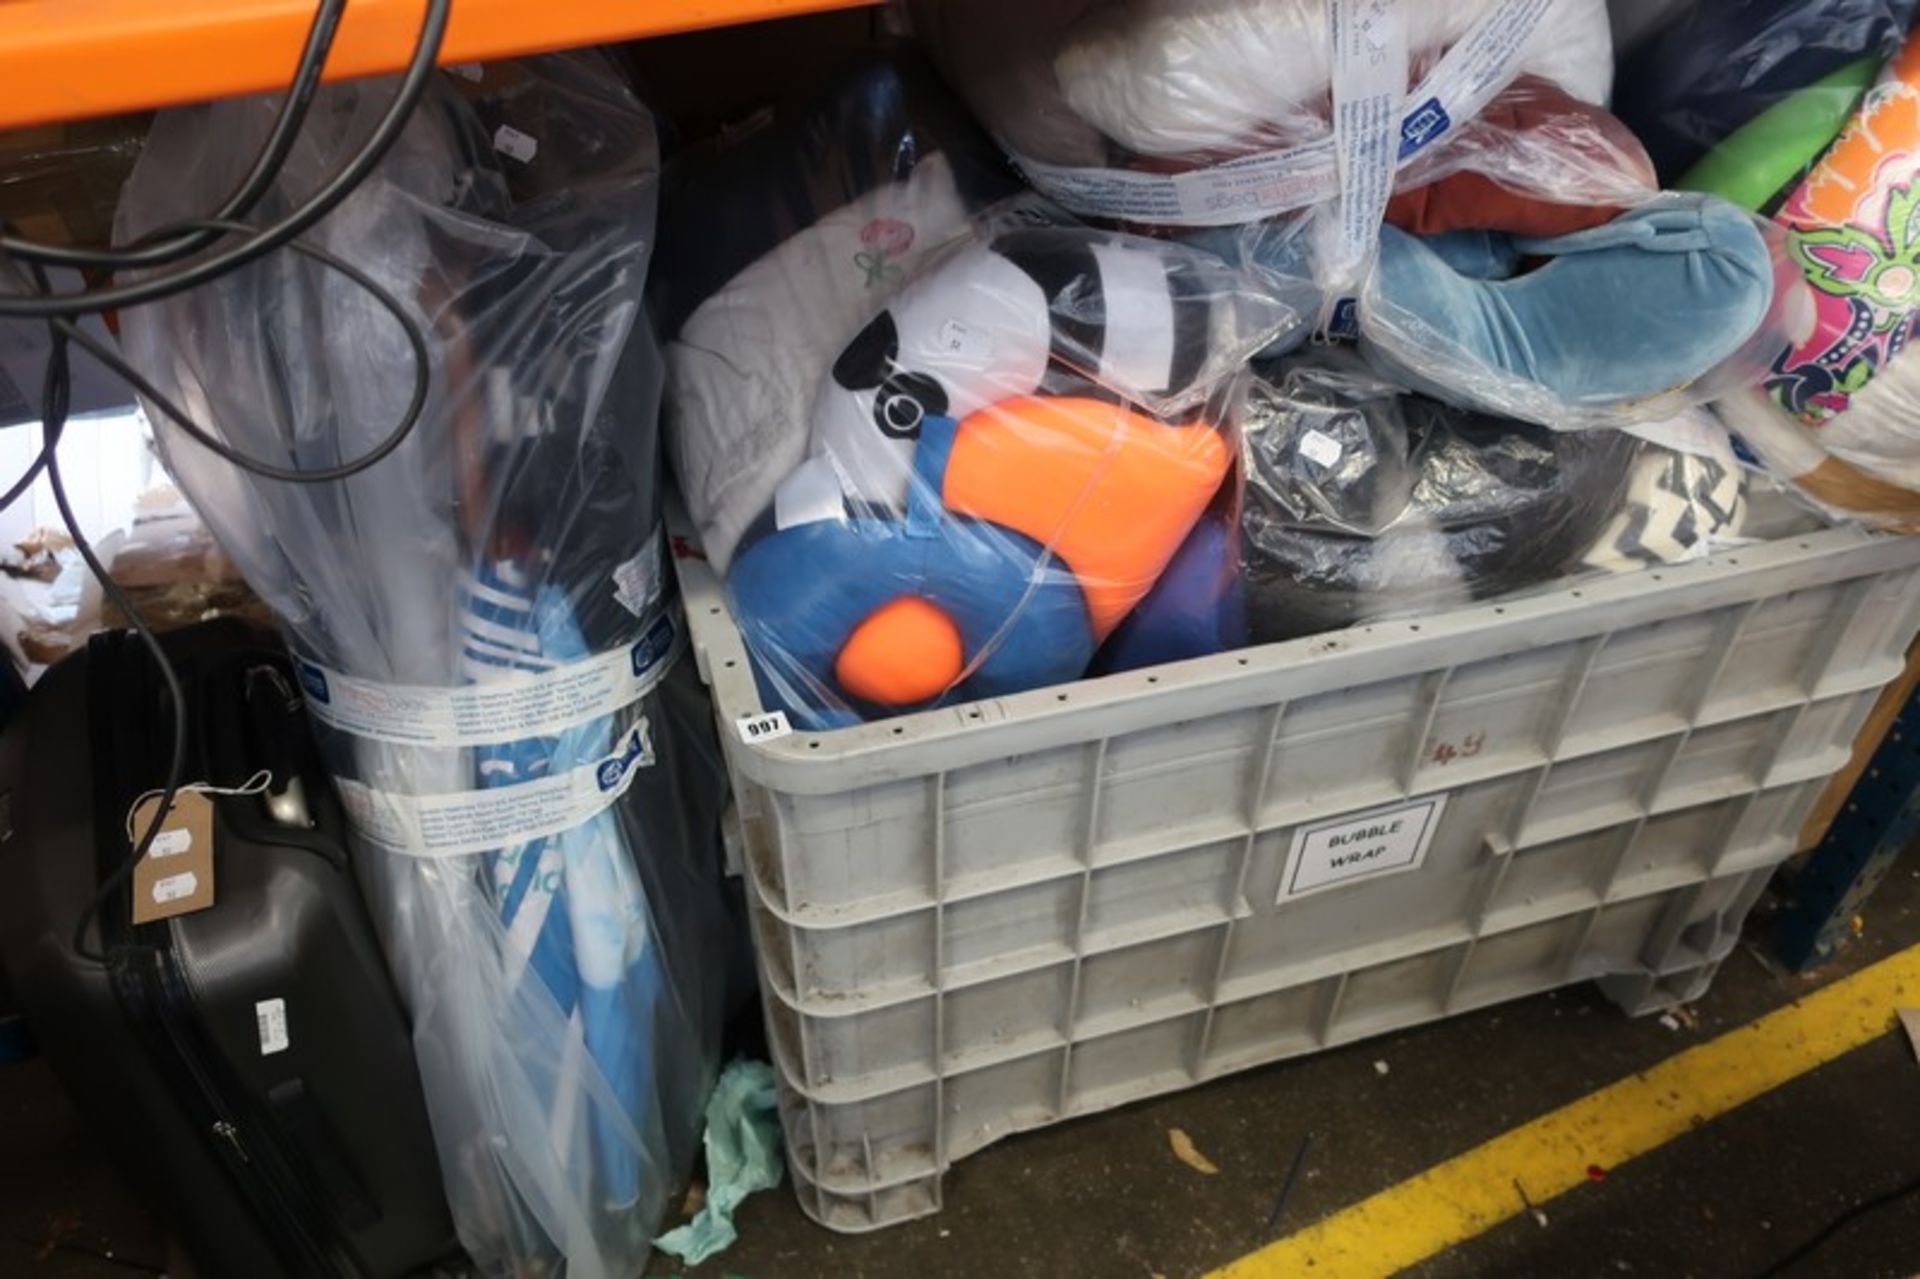 A crate of assorted neck pillows, a bag of walking umbrellas and a suitcase of handbag umbrellas (